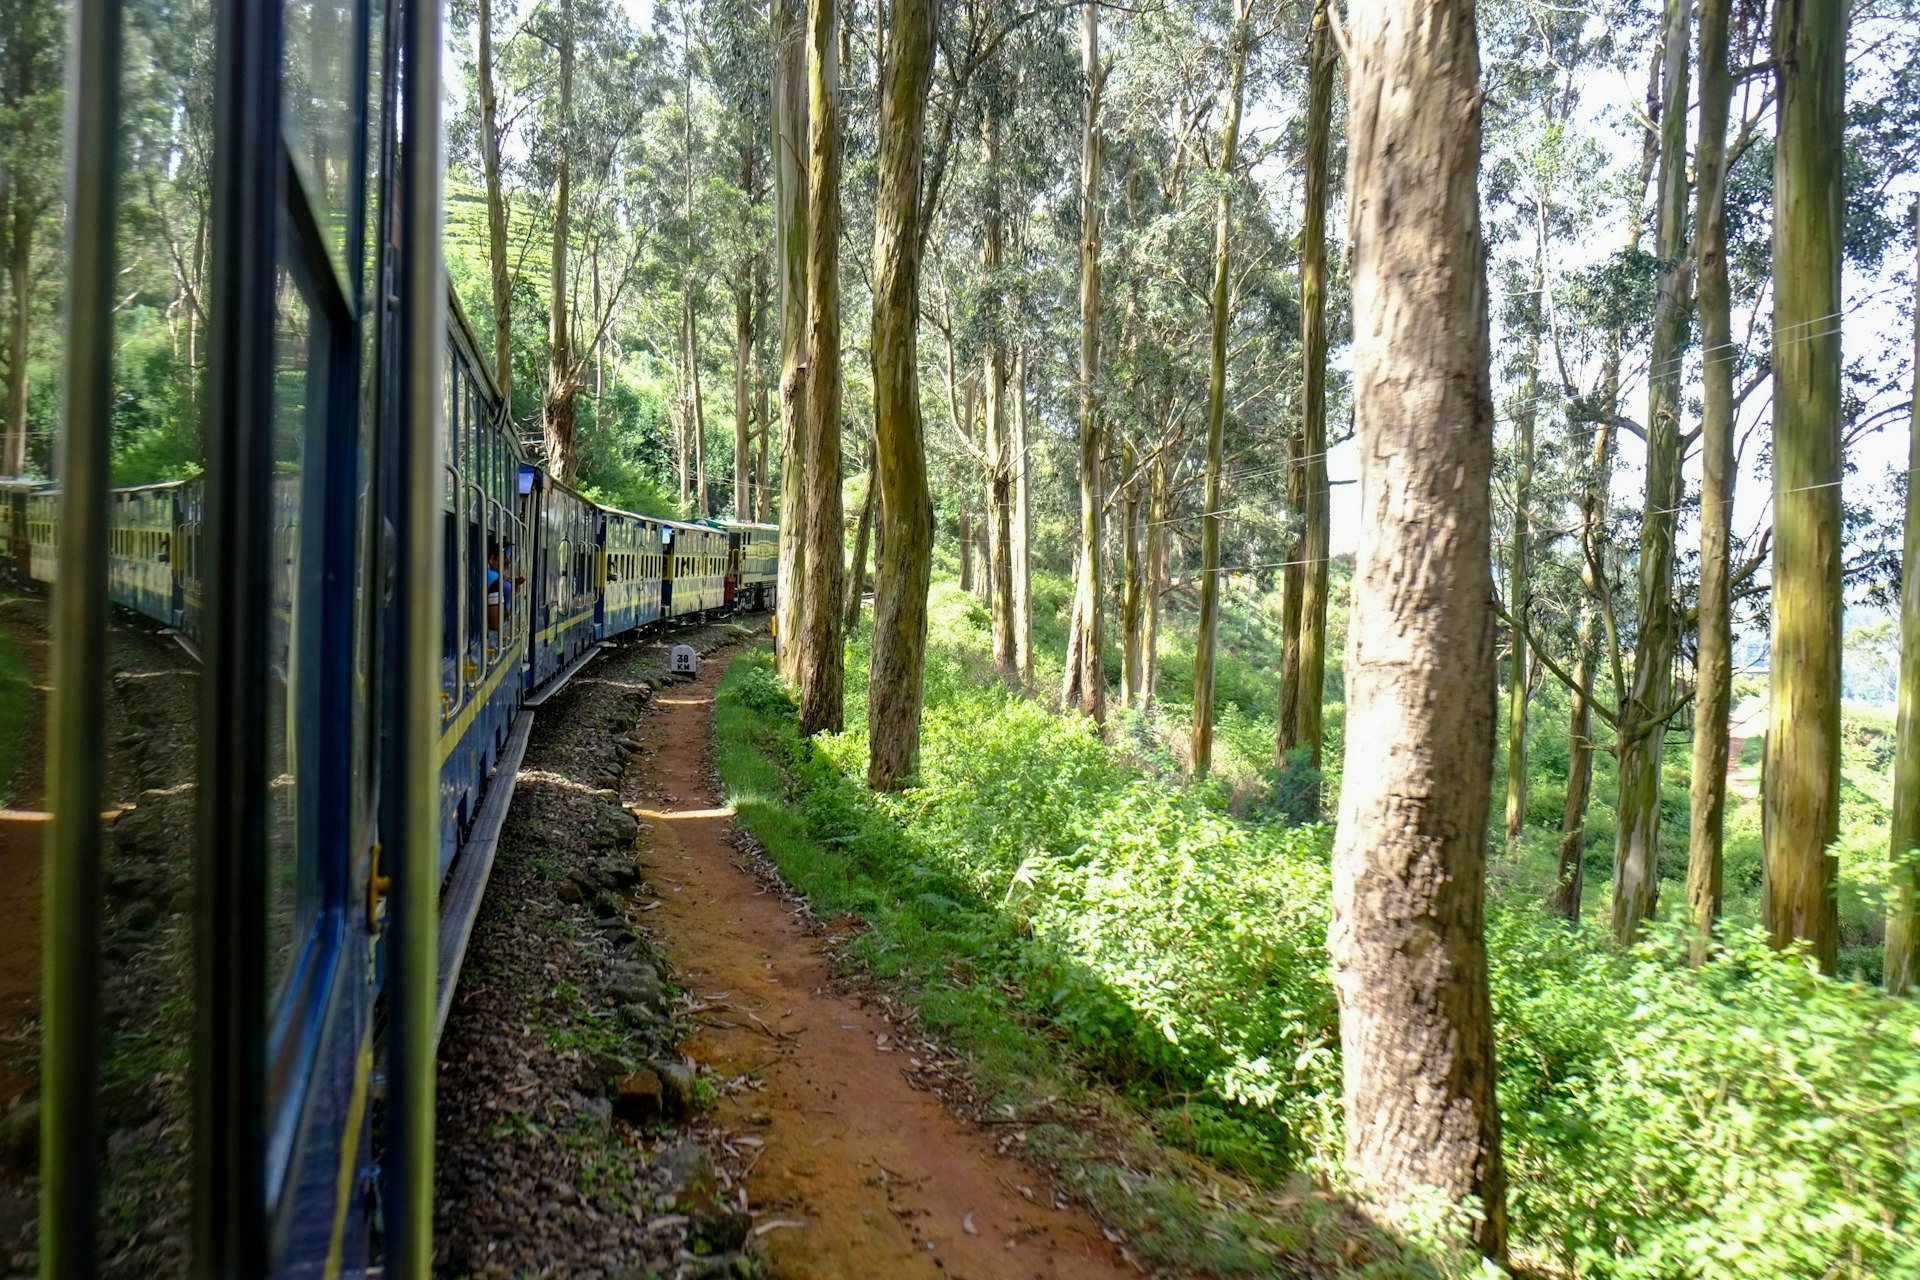 The Nilgiri Mountain Railway in Tamil Nadu, India